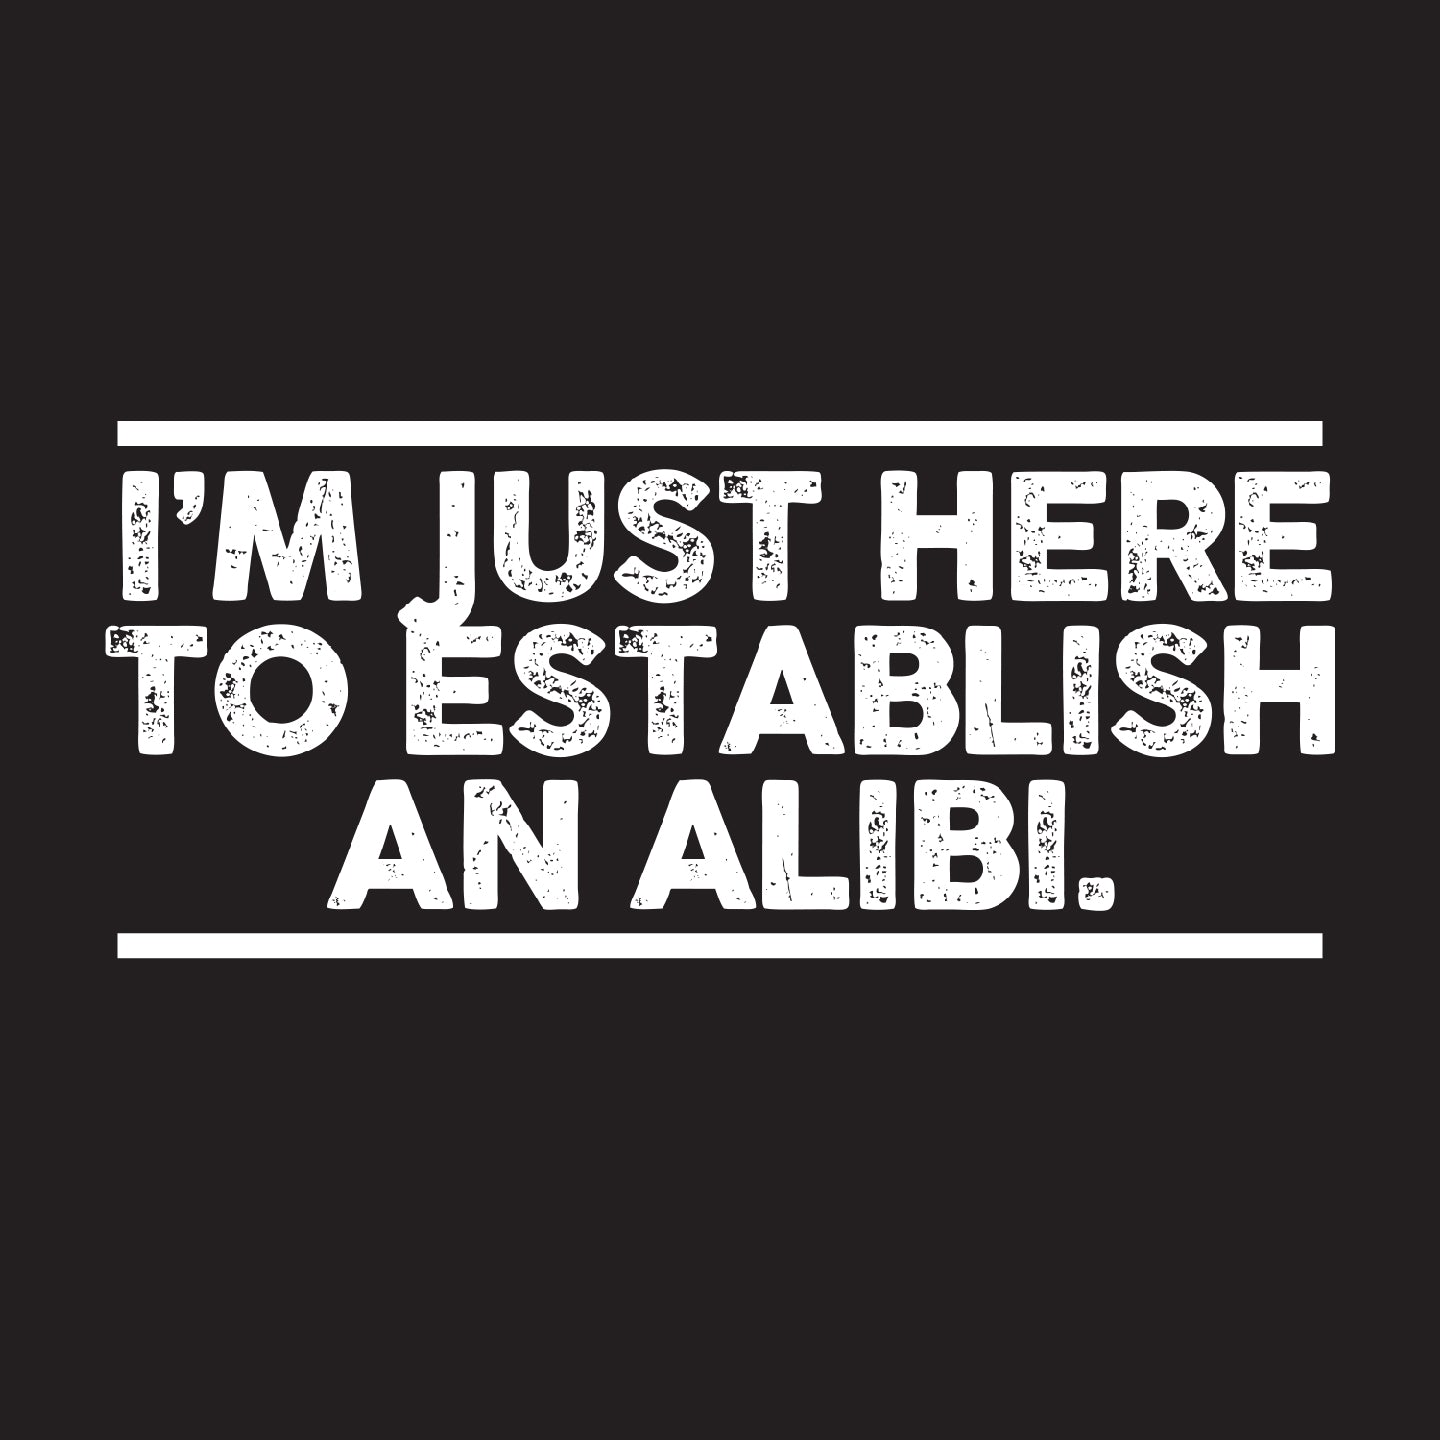 I'm just here to establish an alibi.